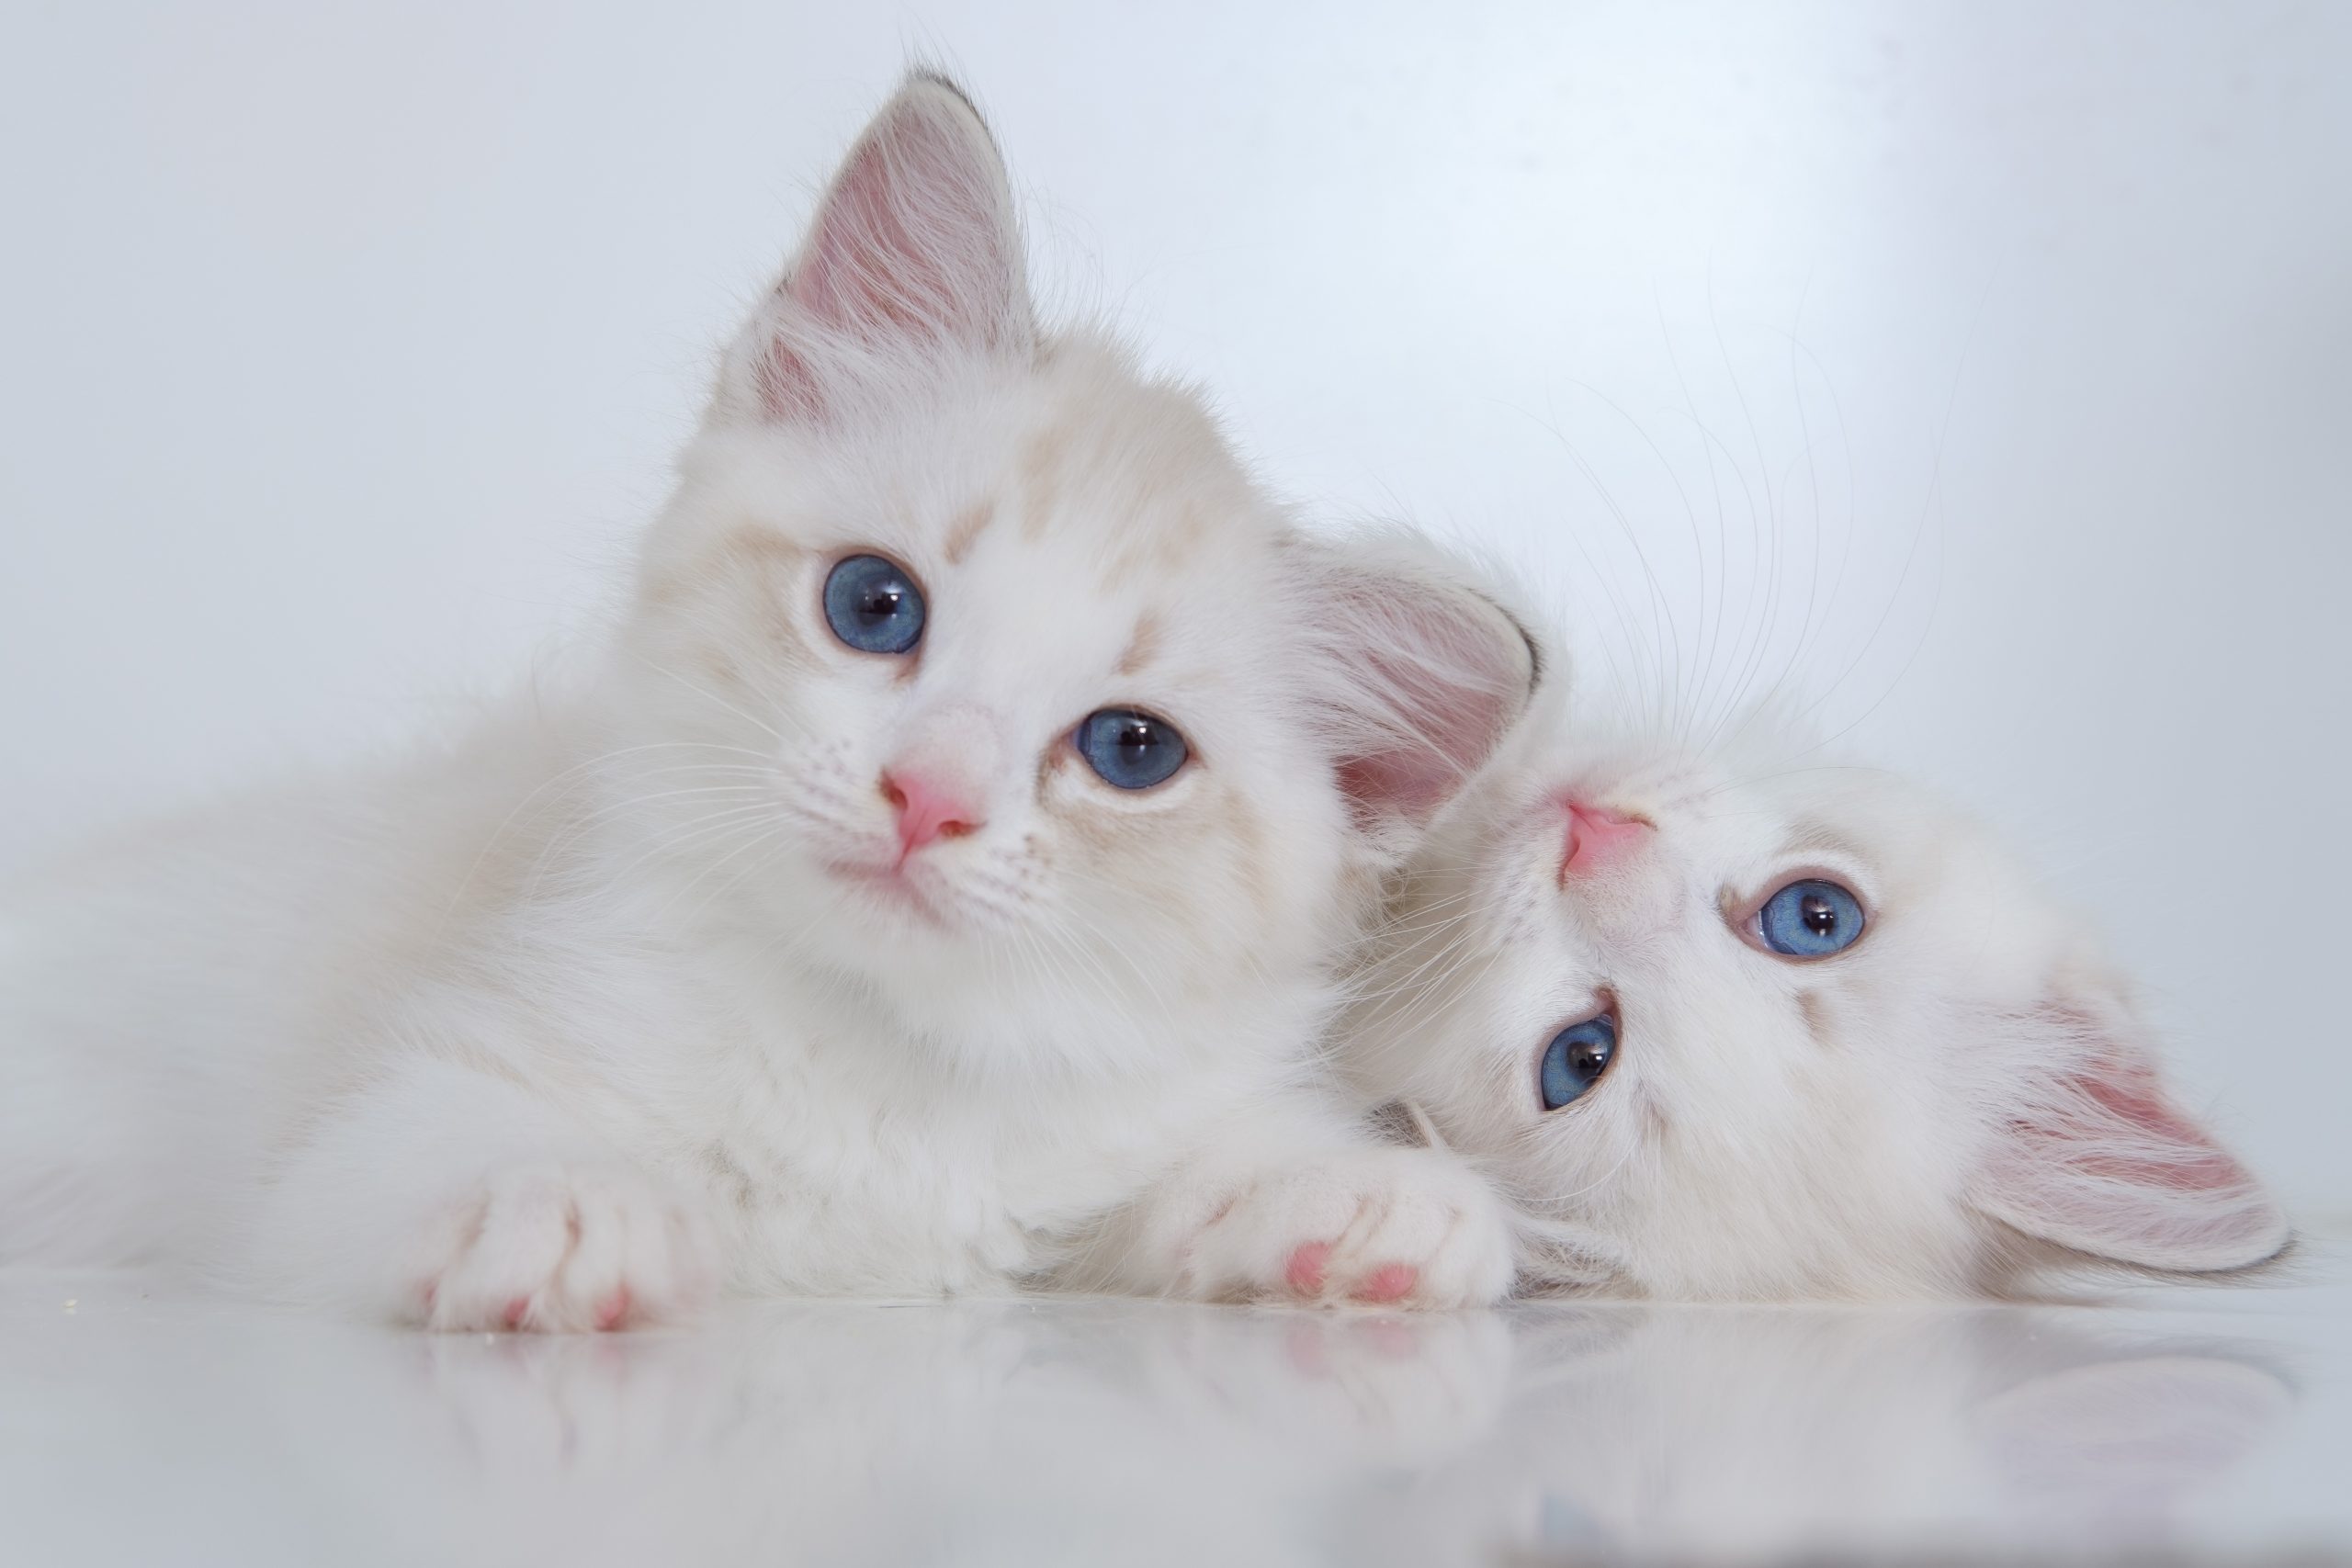 Adorable kittens looking at camera